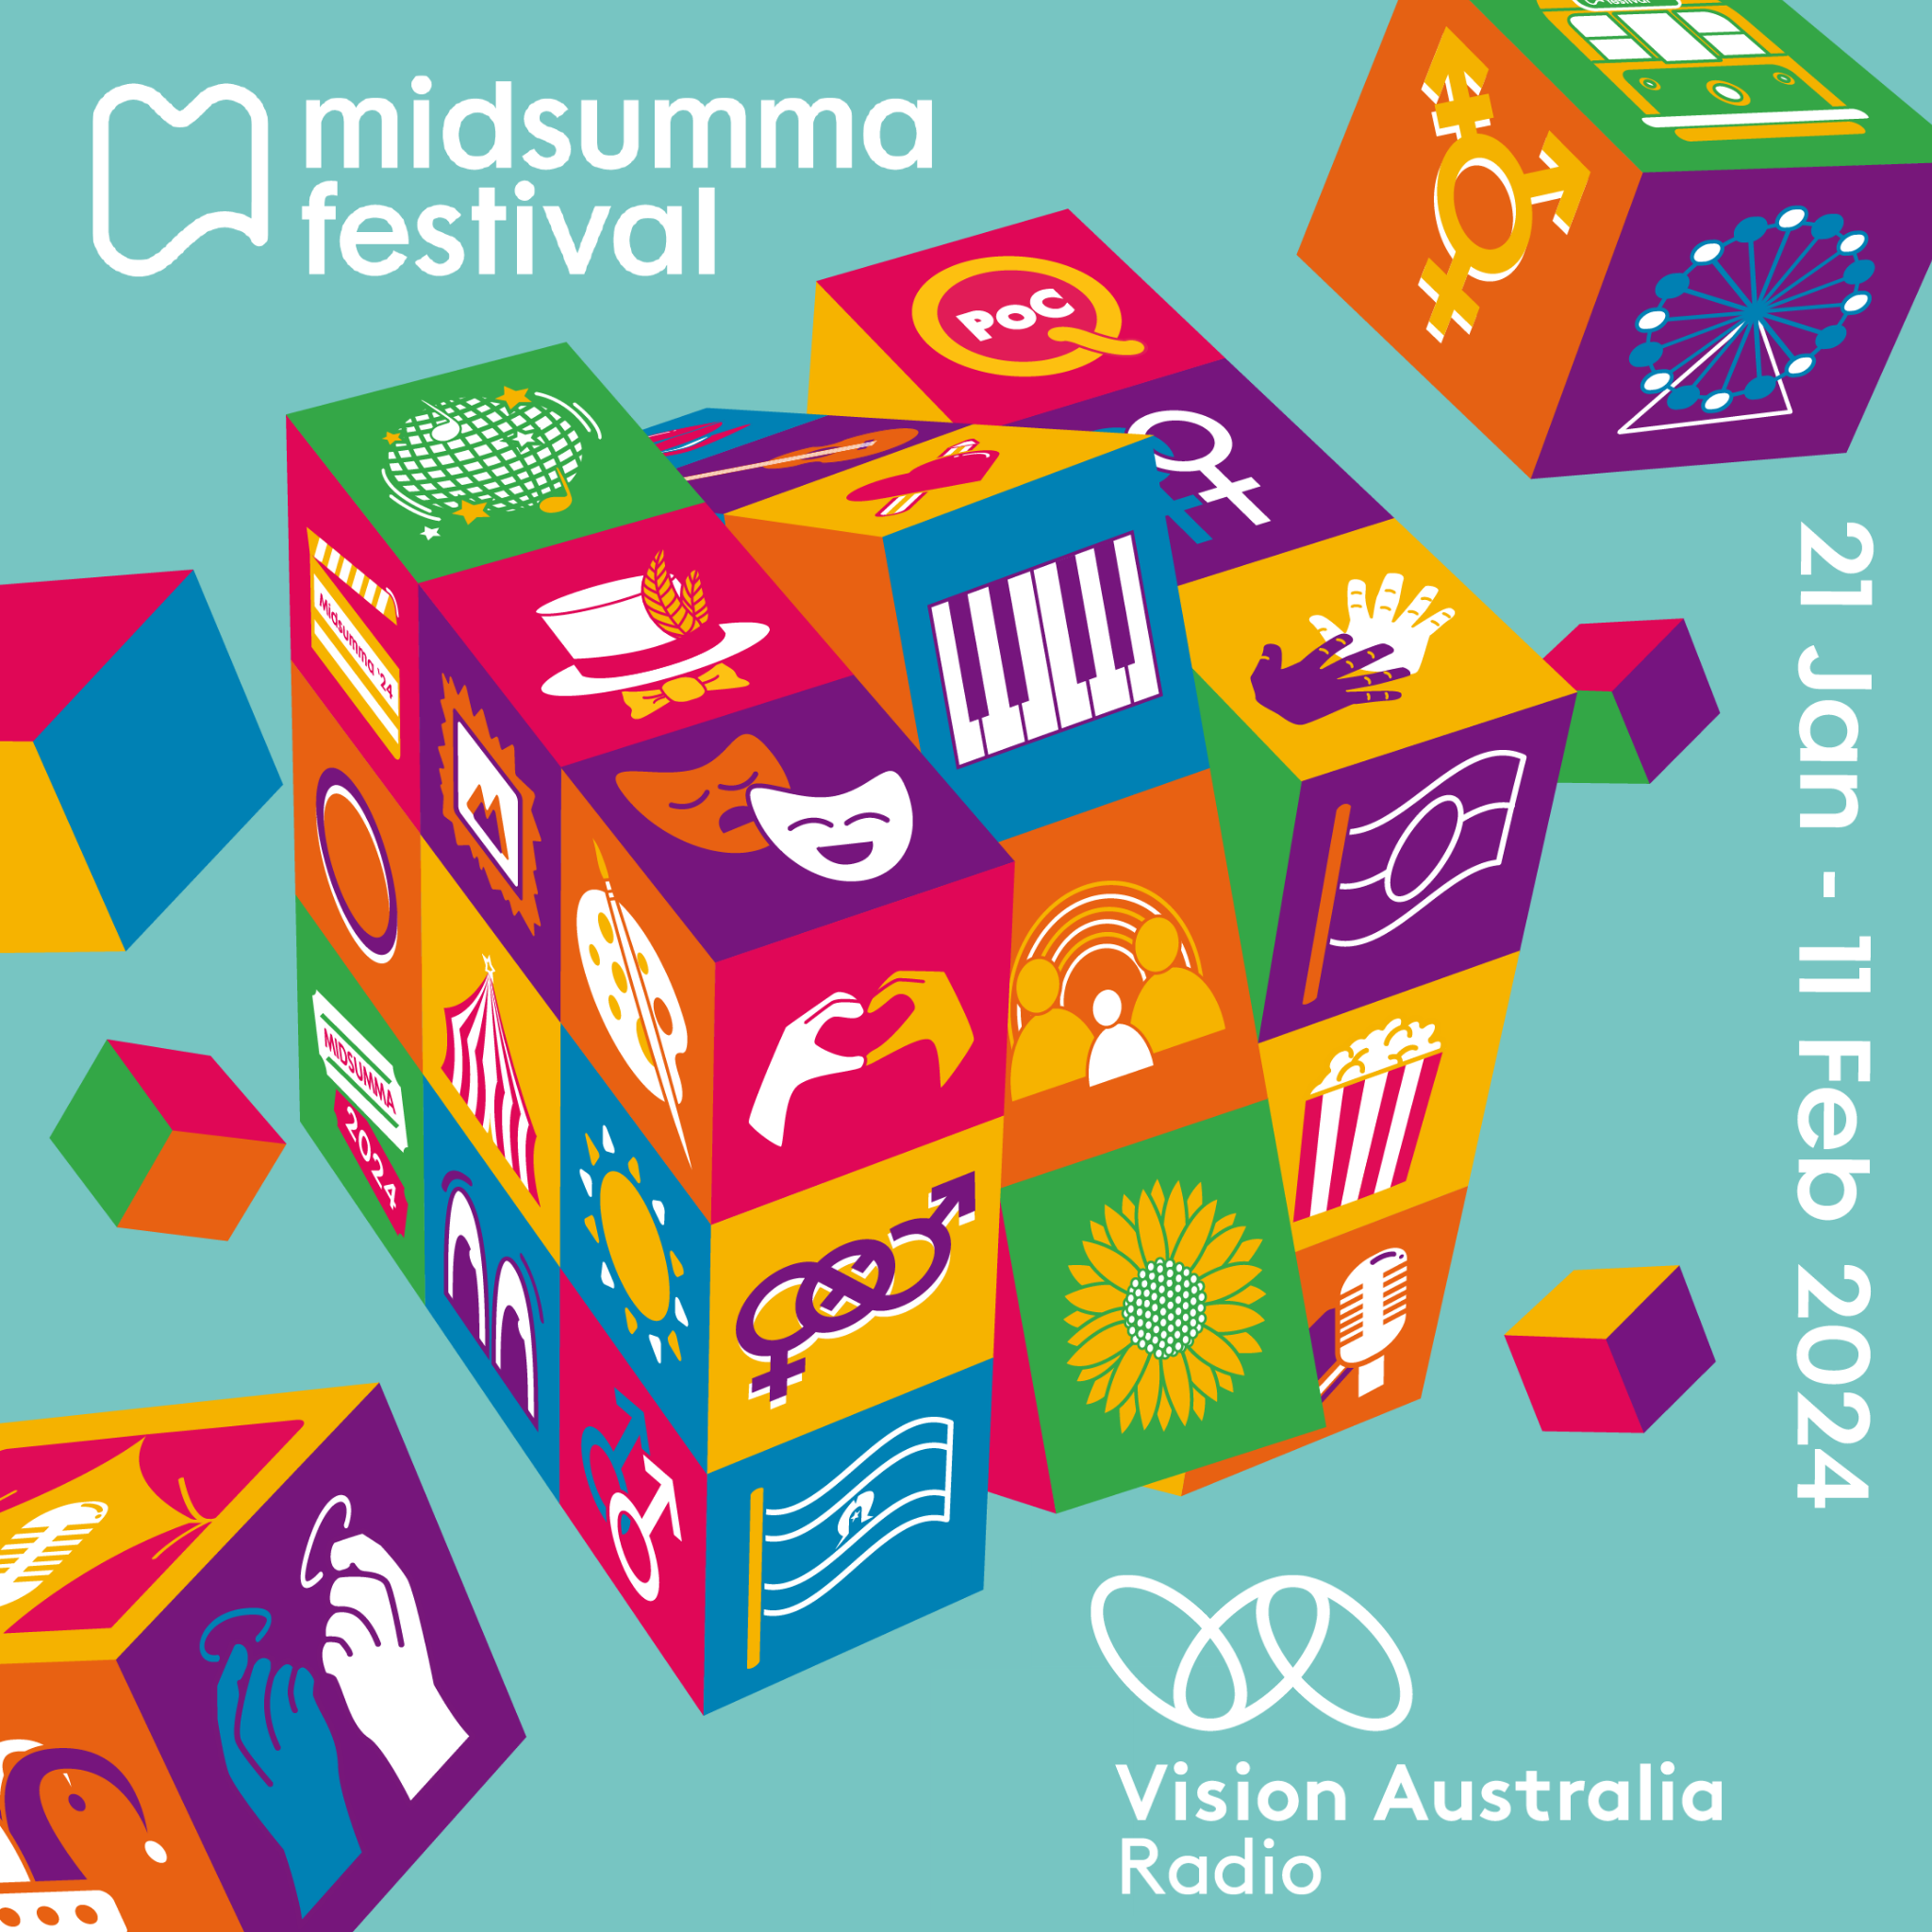 Announcement: Vision Australia Radio is Access and Inclusion partner to Midsumma Festival in 2024.